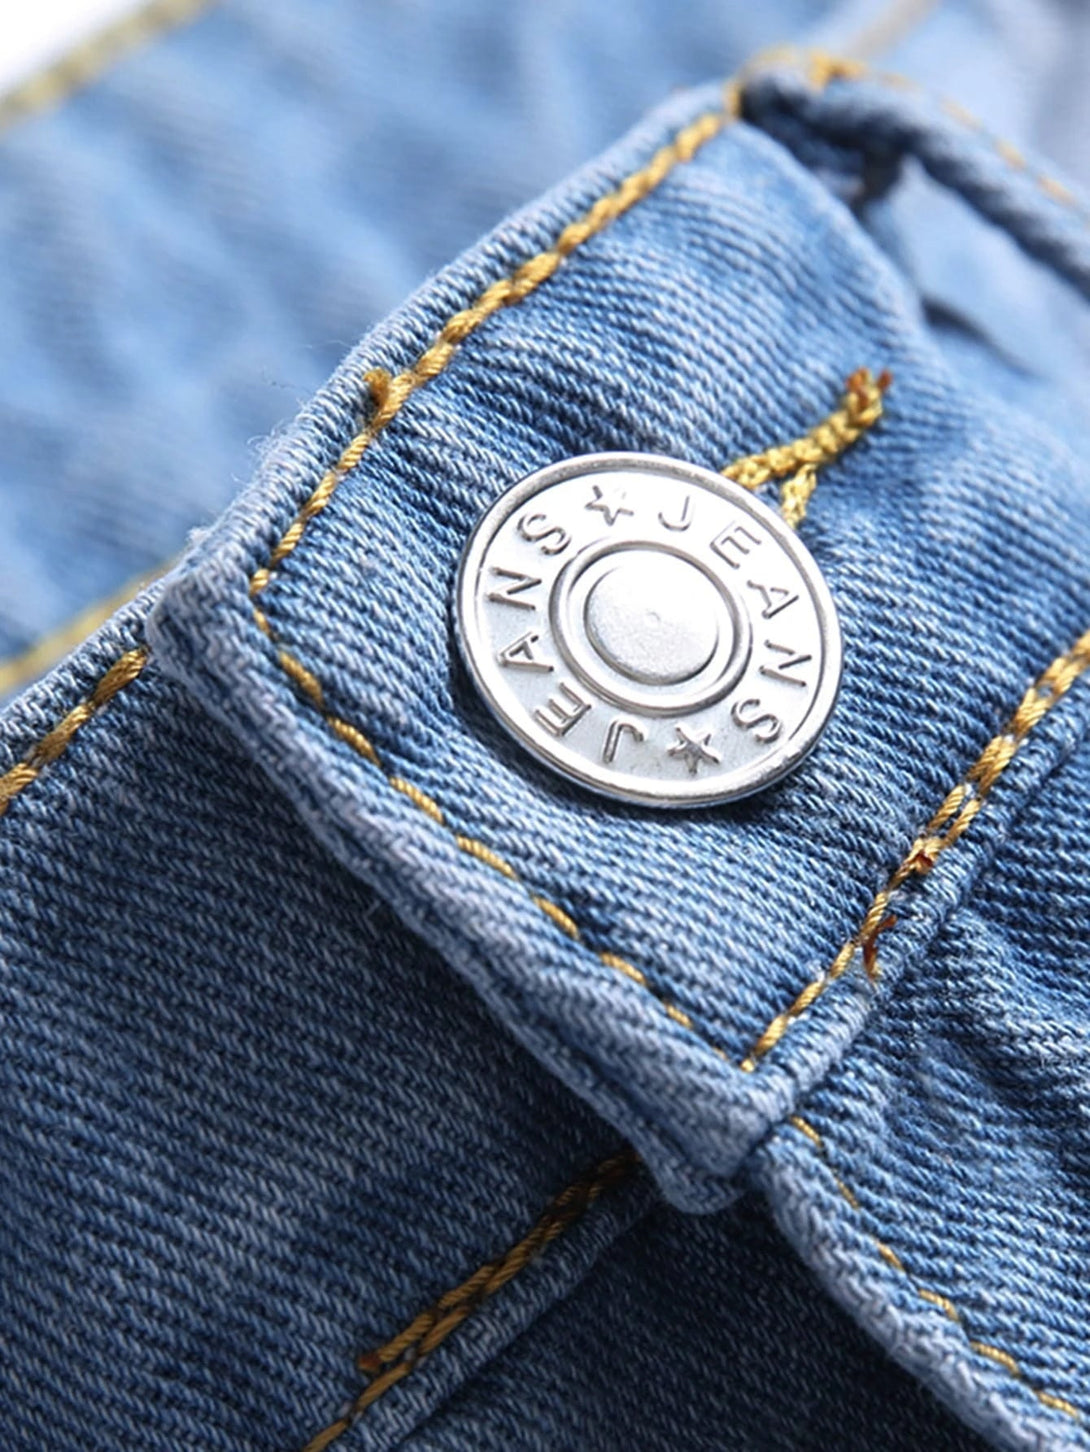 SHEIN Ripped Design Skinny Jeans - Negative Apparel